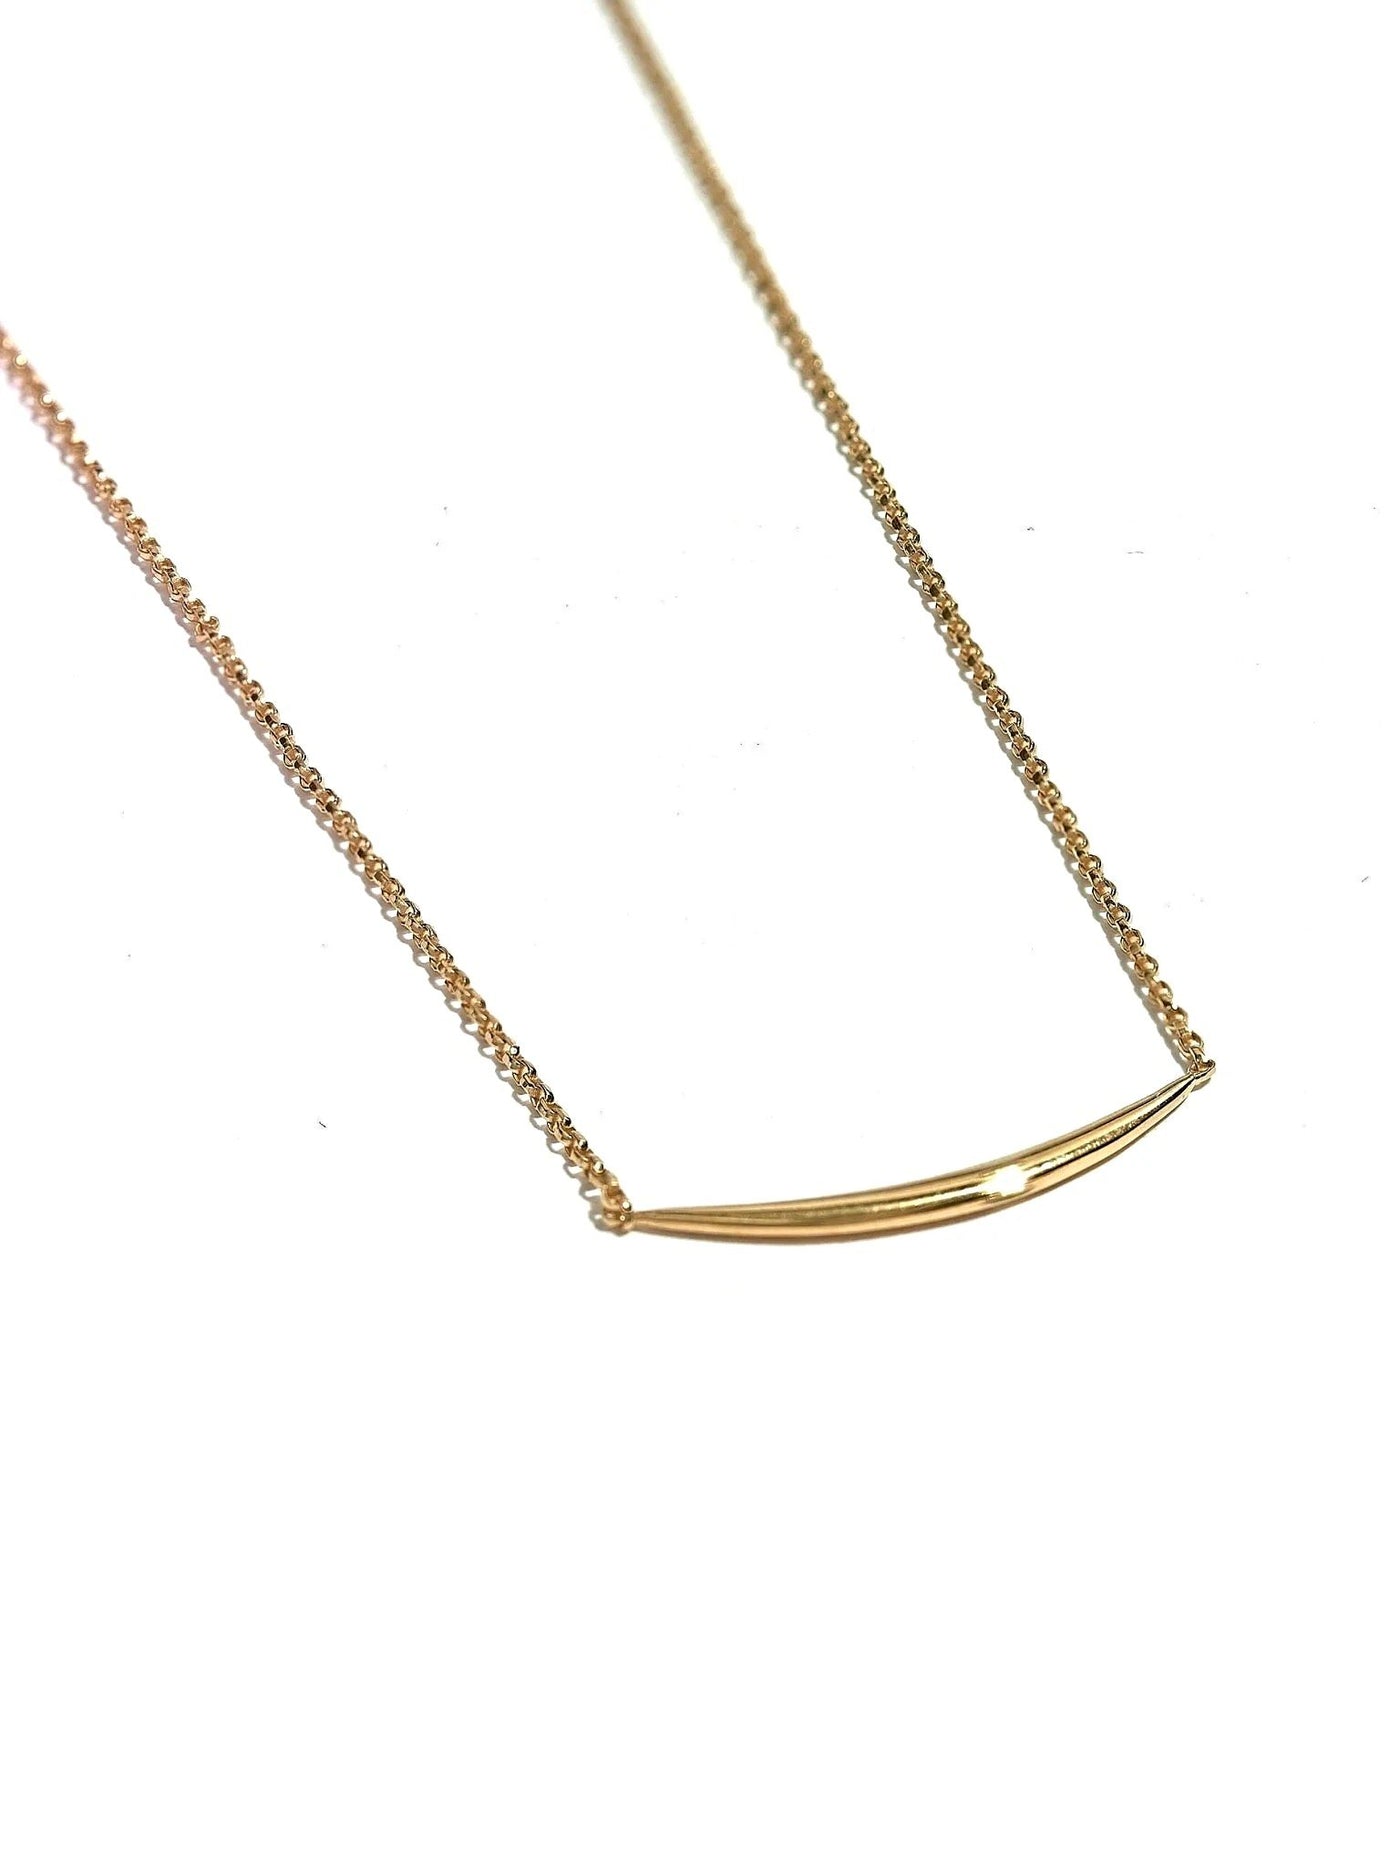 Mona Moon Necklace - 24K Gold PlatedBackUpItemsBridesmaid GiftLunai Jewelry